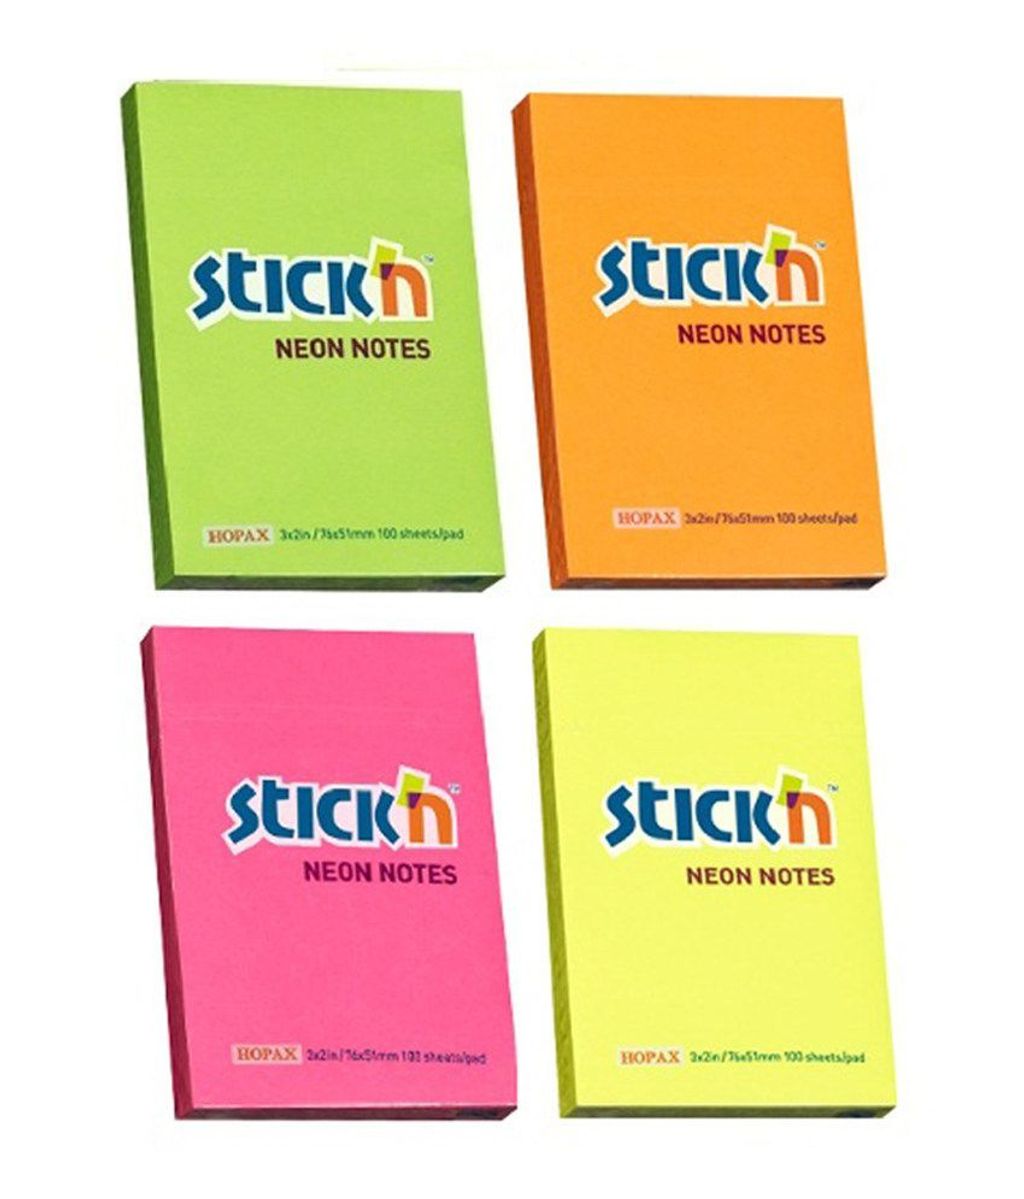 Stick-n-Neon-Notes-SDL011401834-1-0c62f.jpg